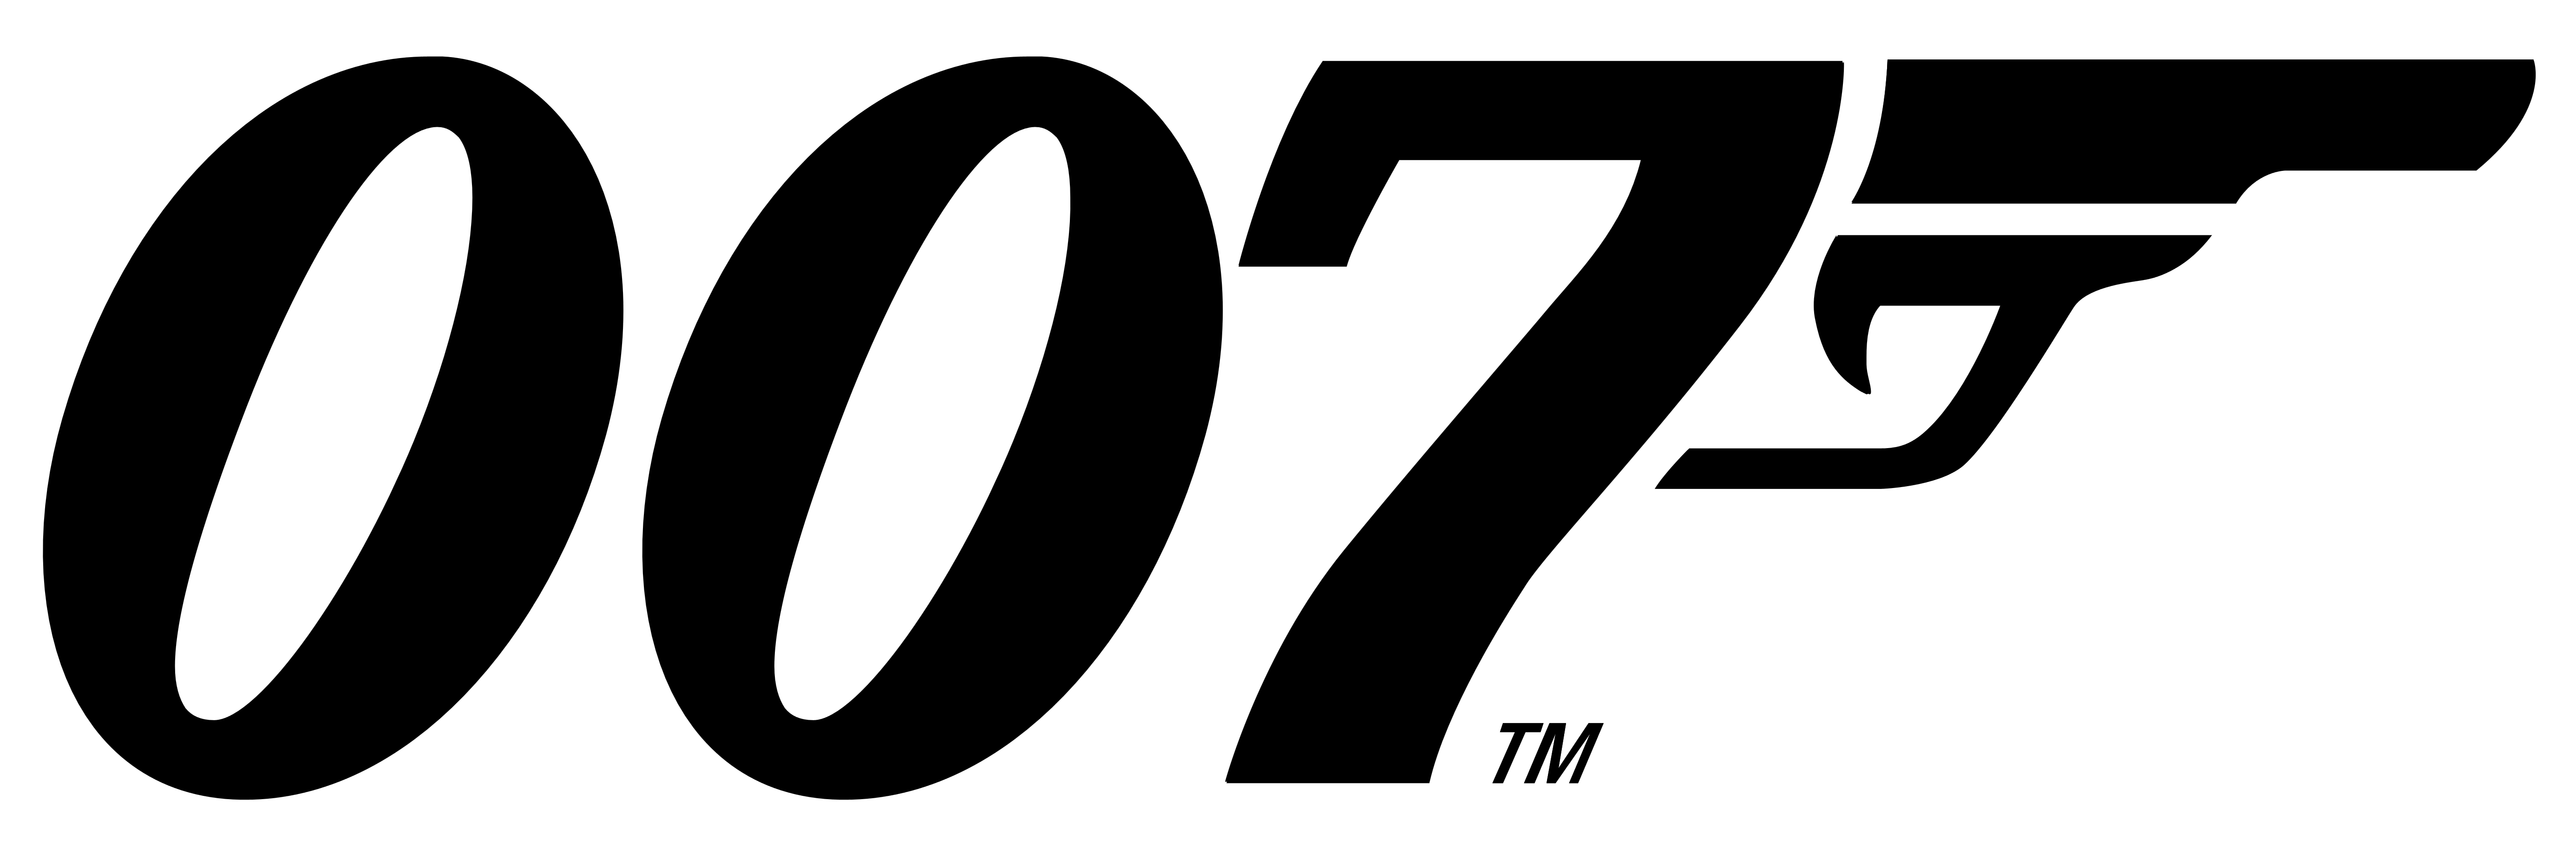 GoldenEye 007 Logo Background PNG